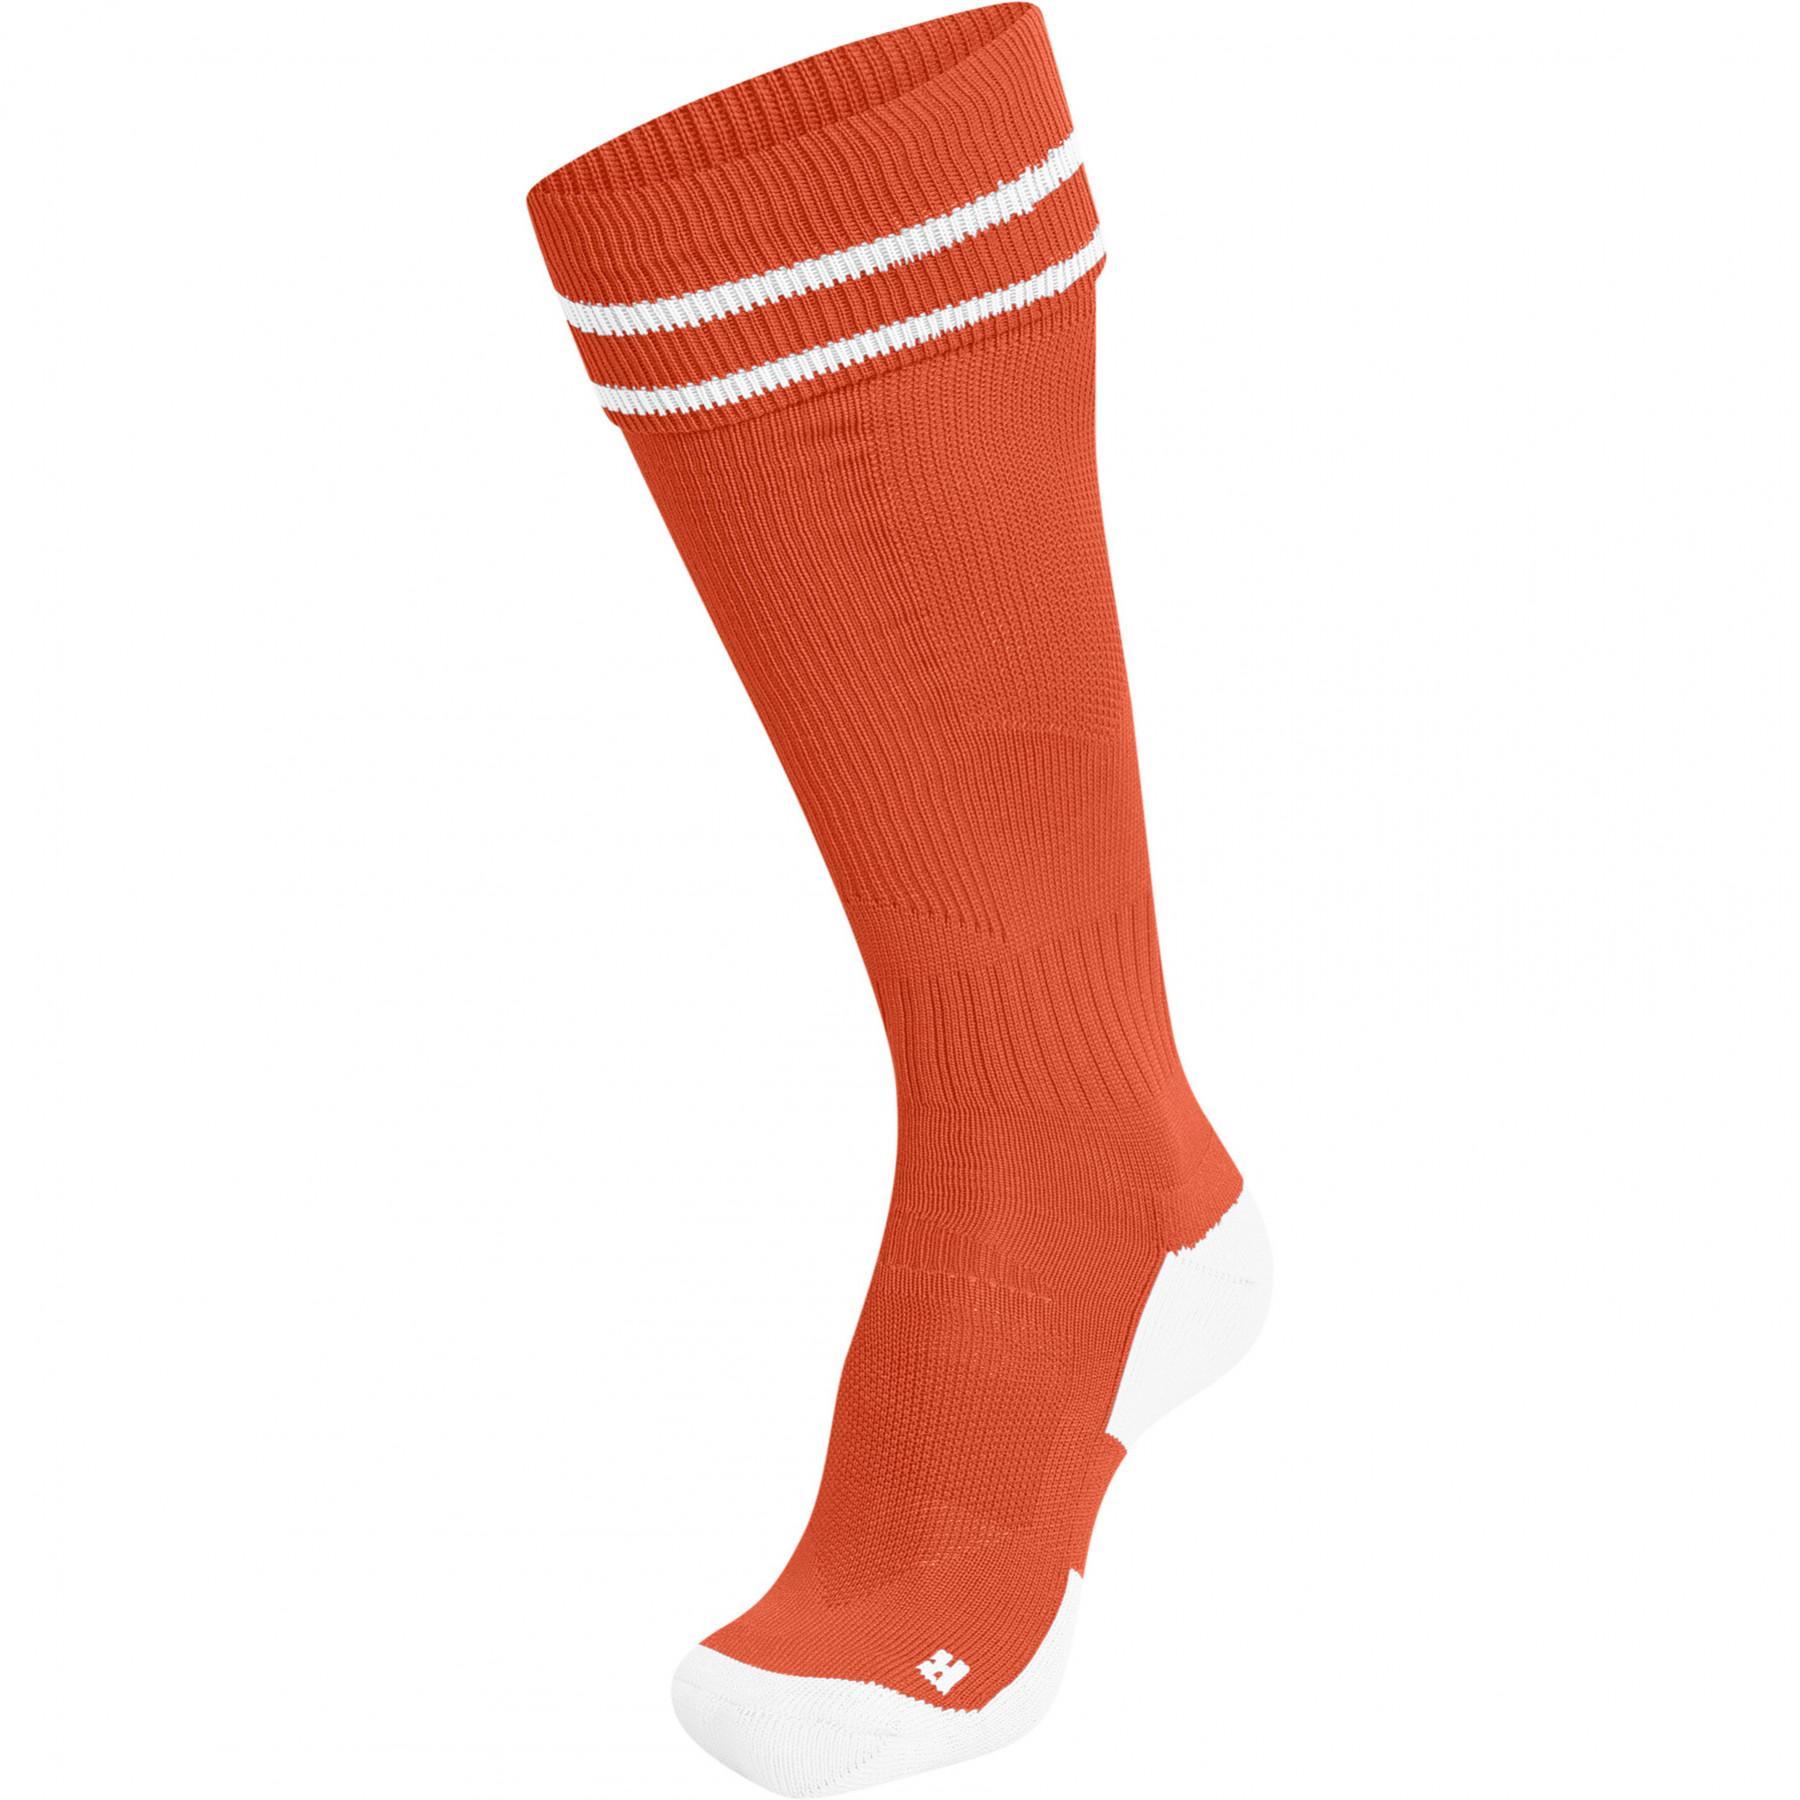 Football socks Hummel element